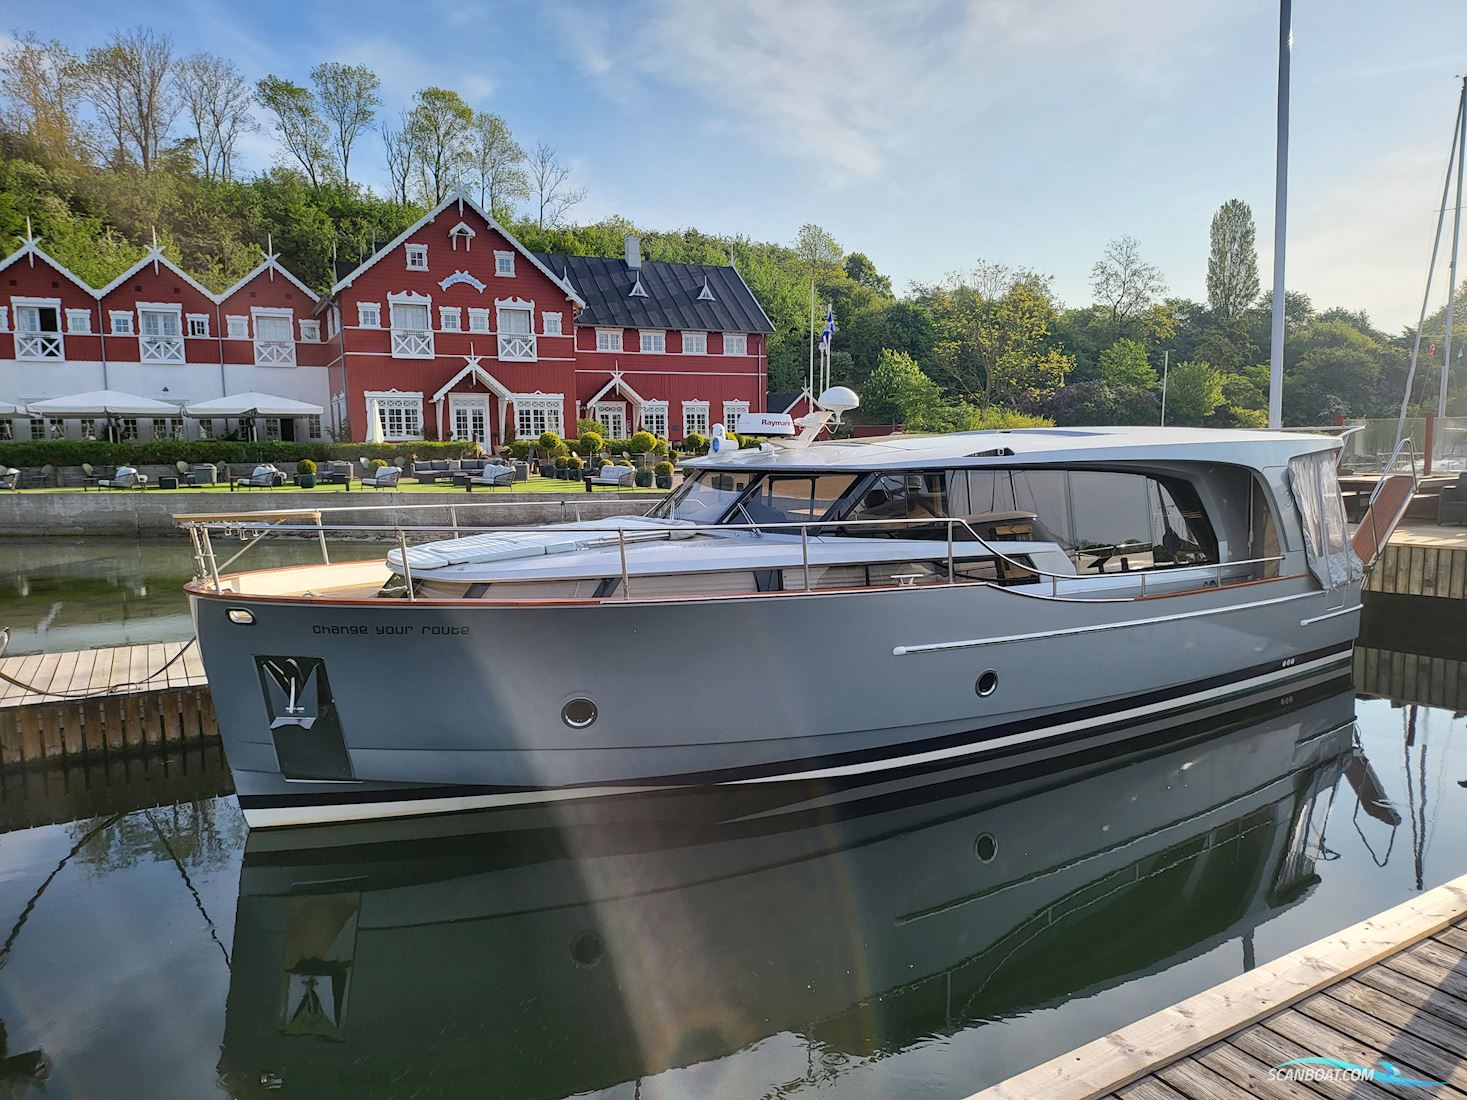 Greenline 40 Hybrid Motor boat 2013, with Wolksvagen Tdi 150 engine, Denmark